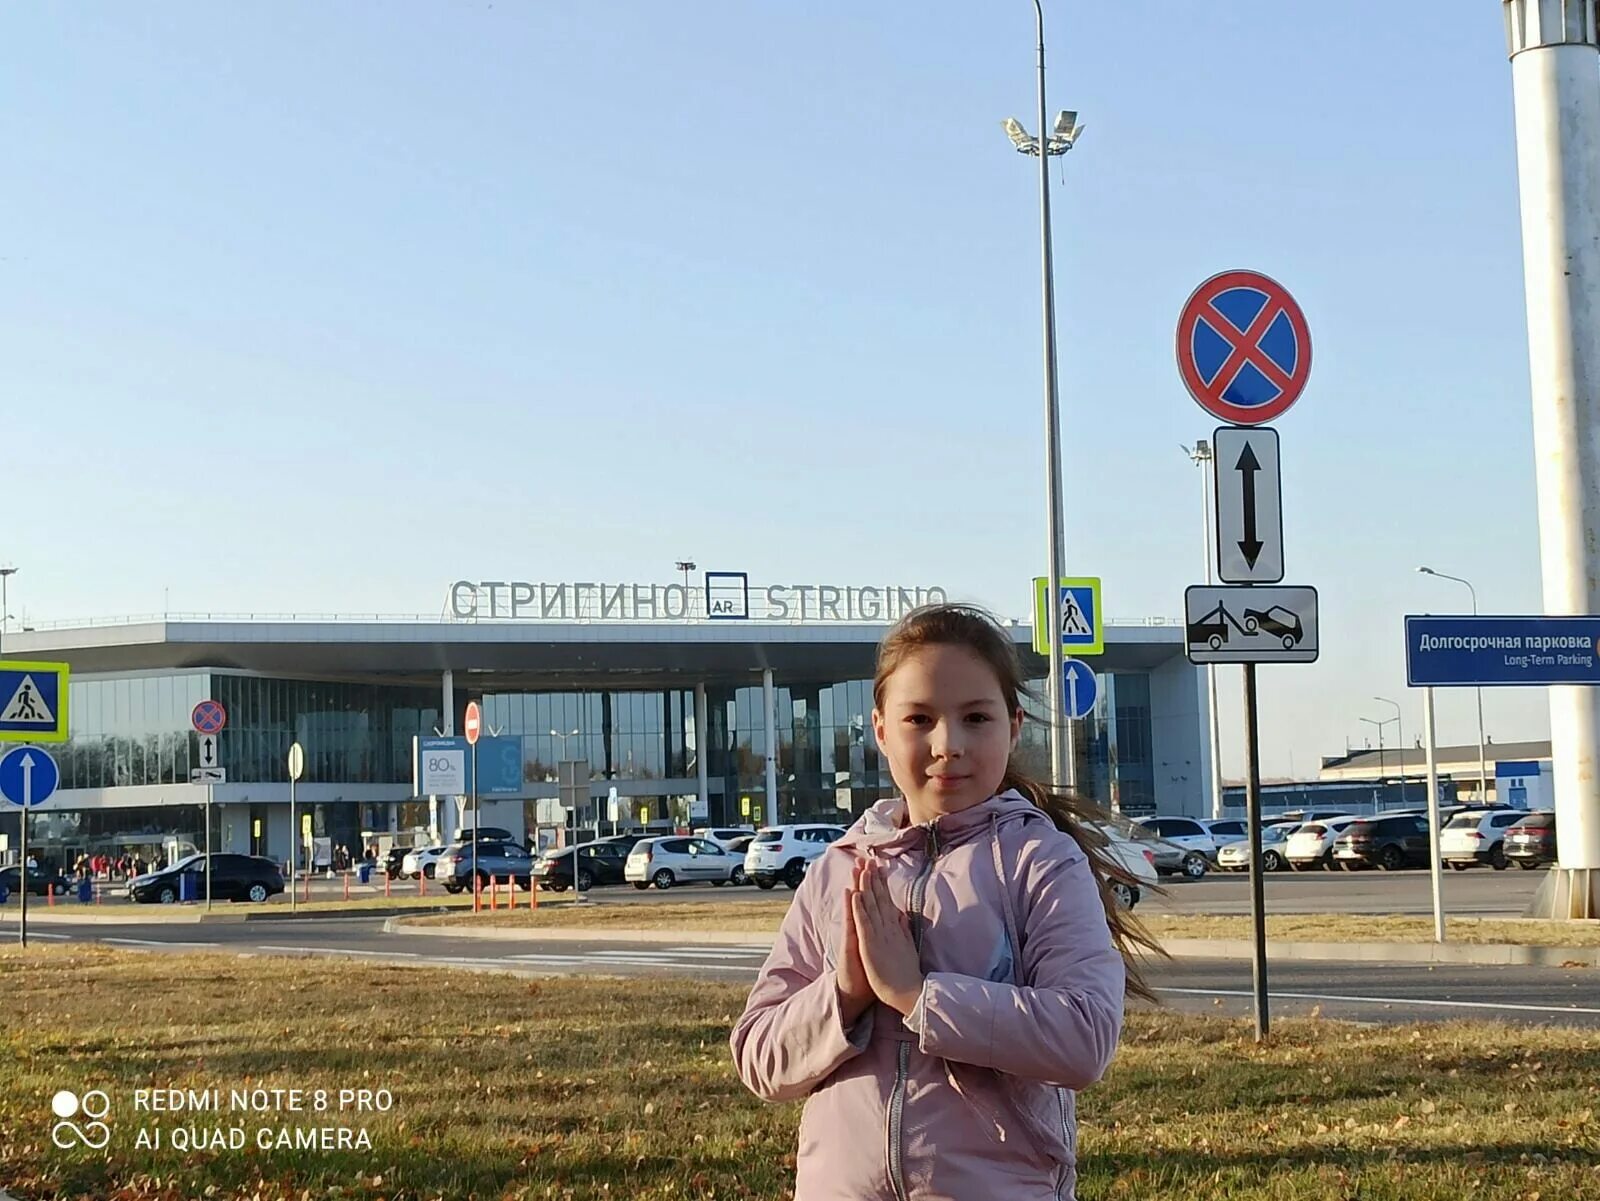 Аэропорт Чкалов Нижний Новгород. Нижний Новгород дорожные знаки около аэропорта Стригино.